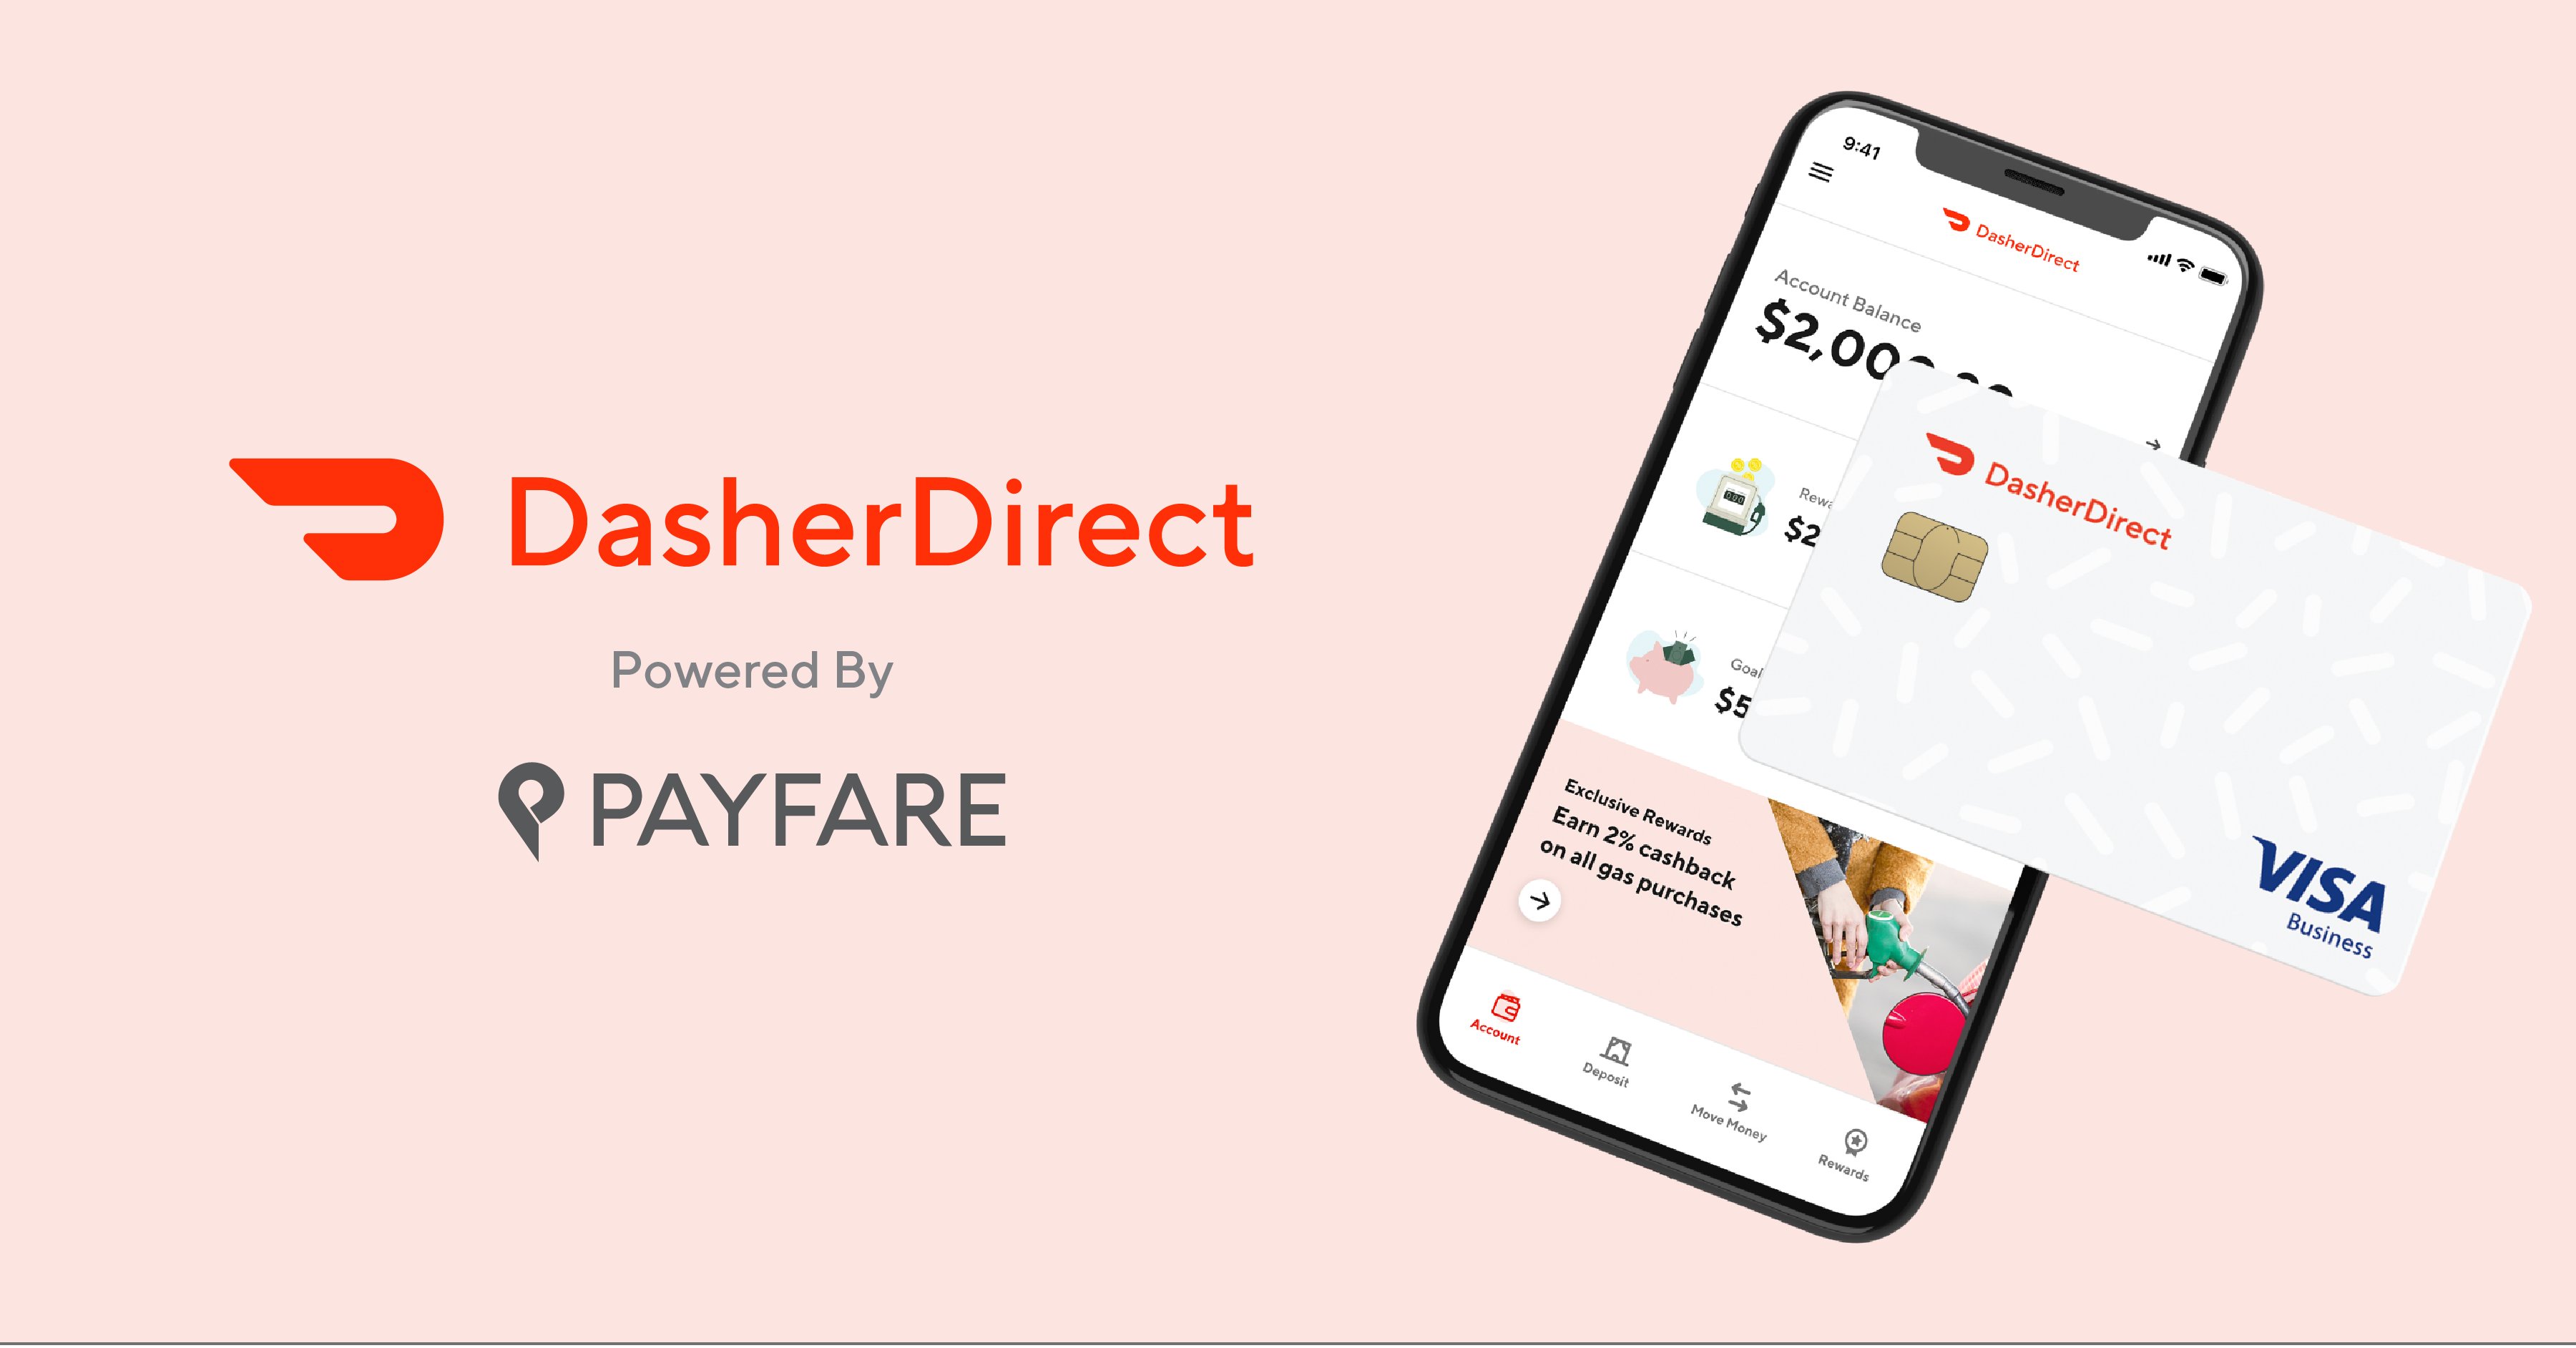 Dasherdirect app and card